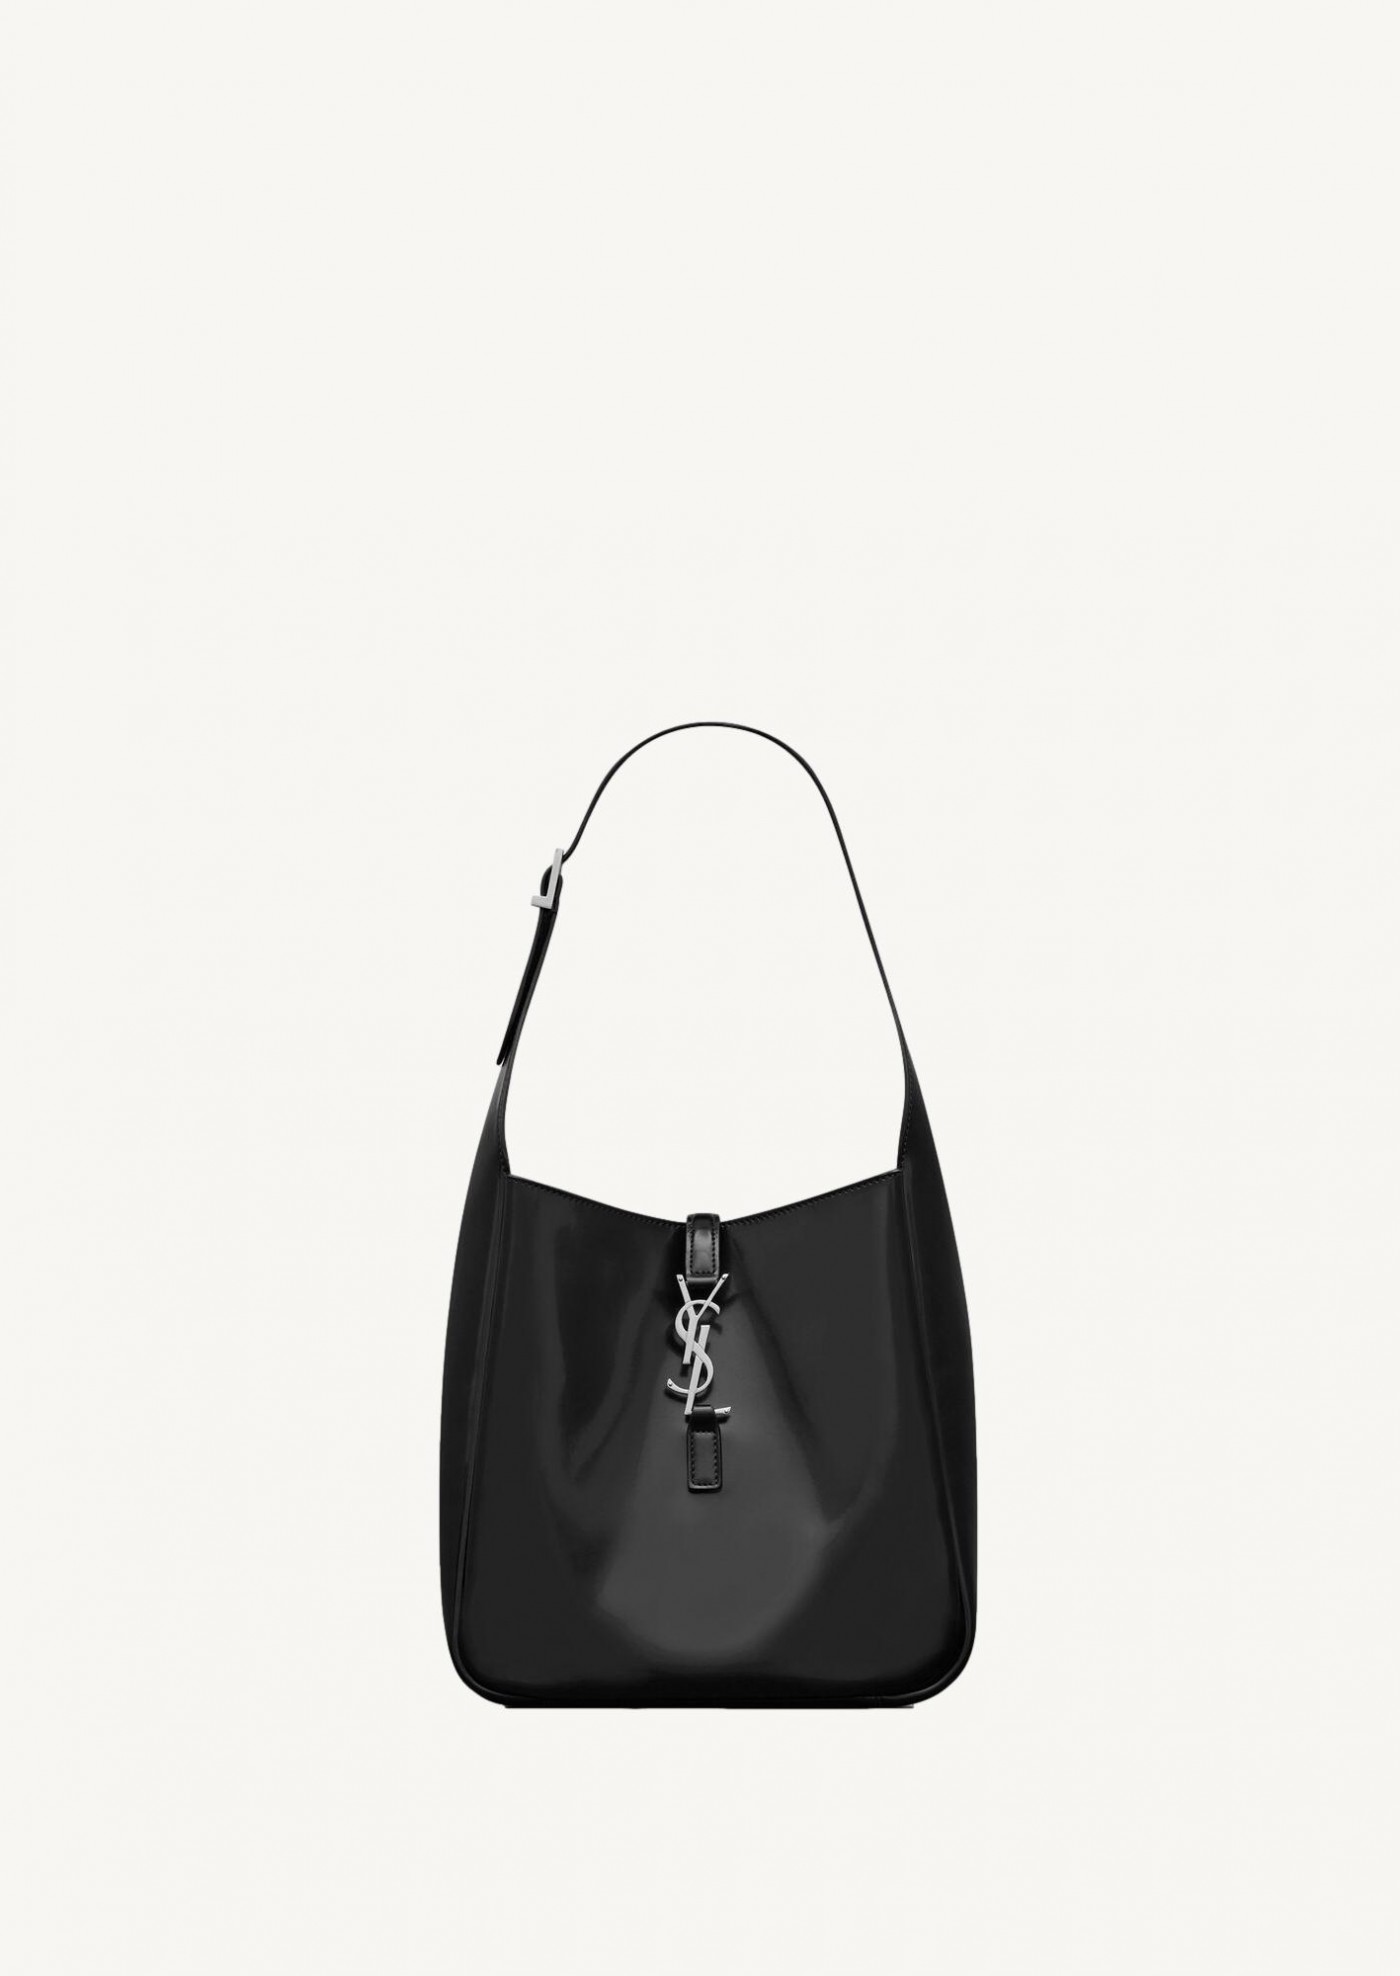 Michael Kors Gabby Small Black Leather Top Zip Satchel Crossbody Bag P